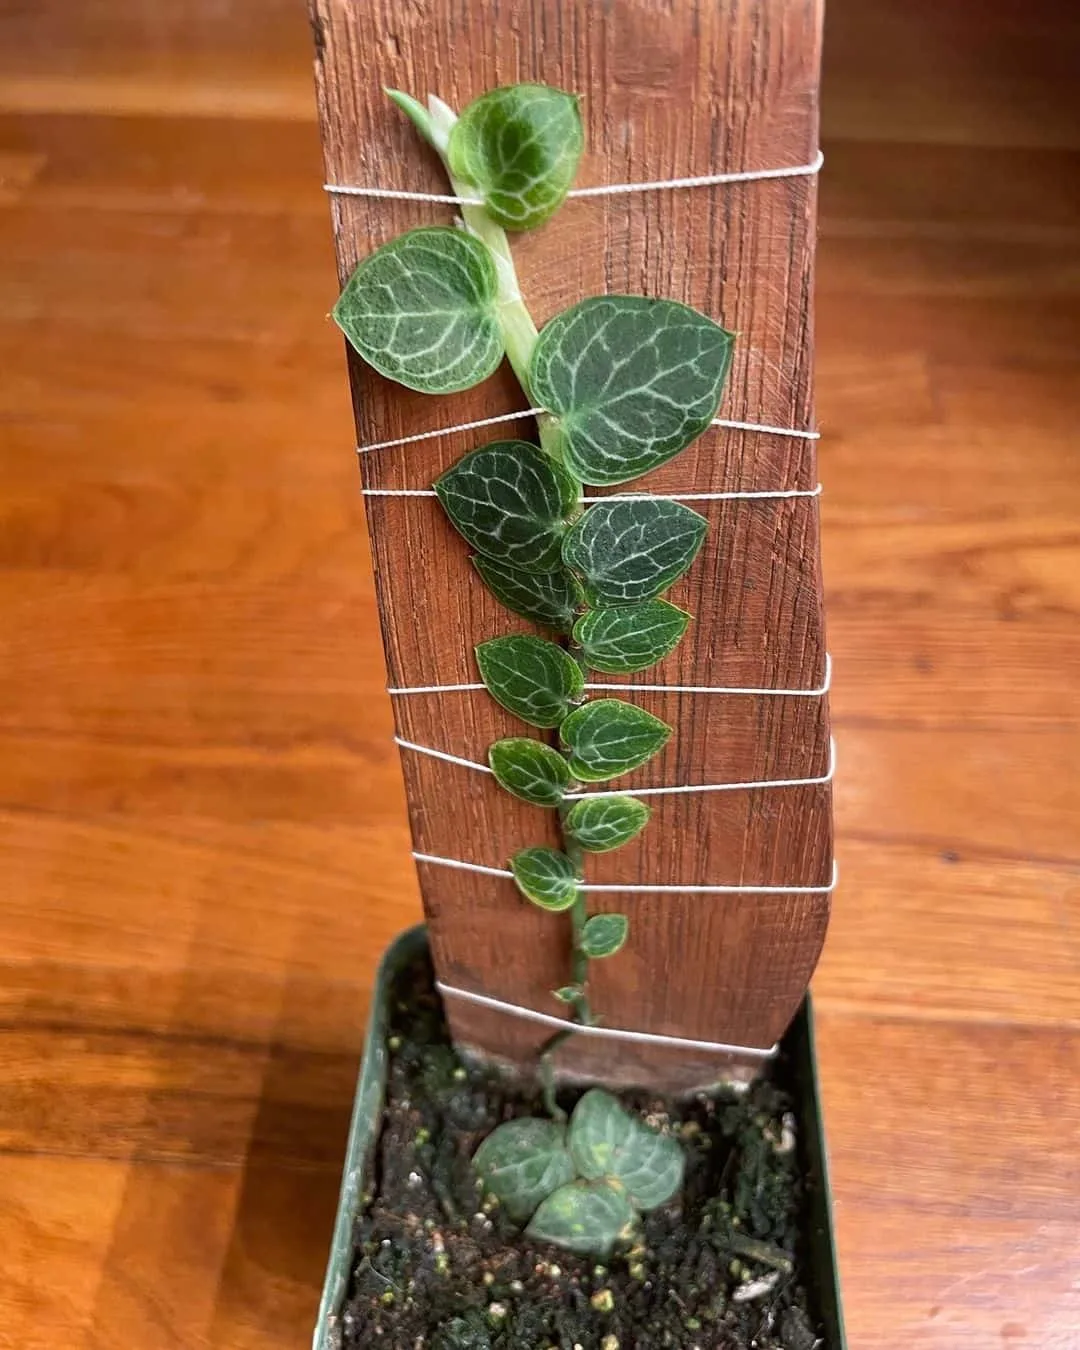 Rhaphidophora Cryptantha plant growing